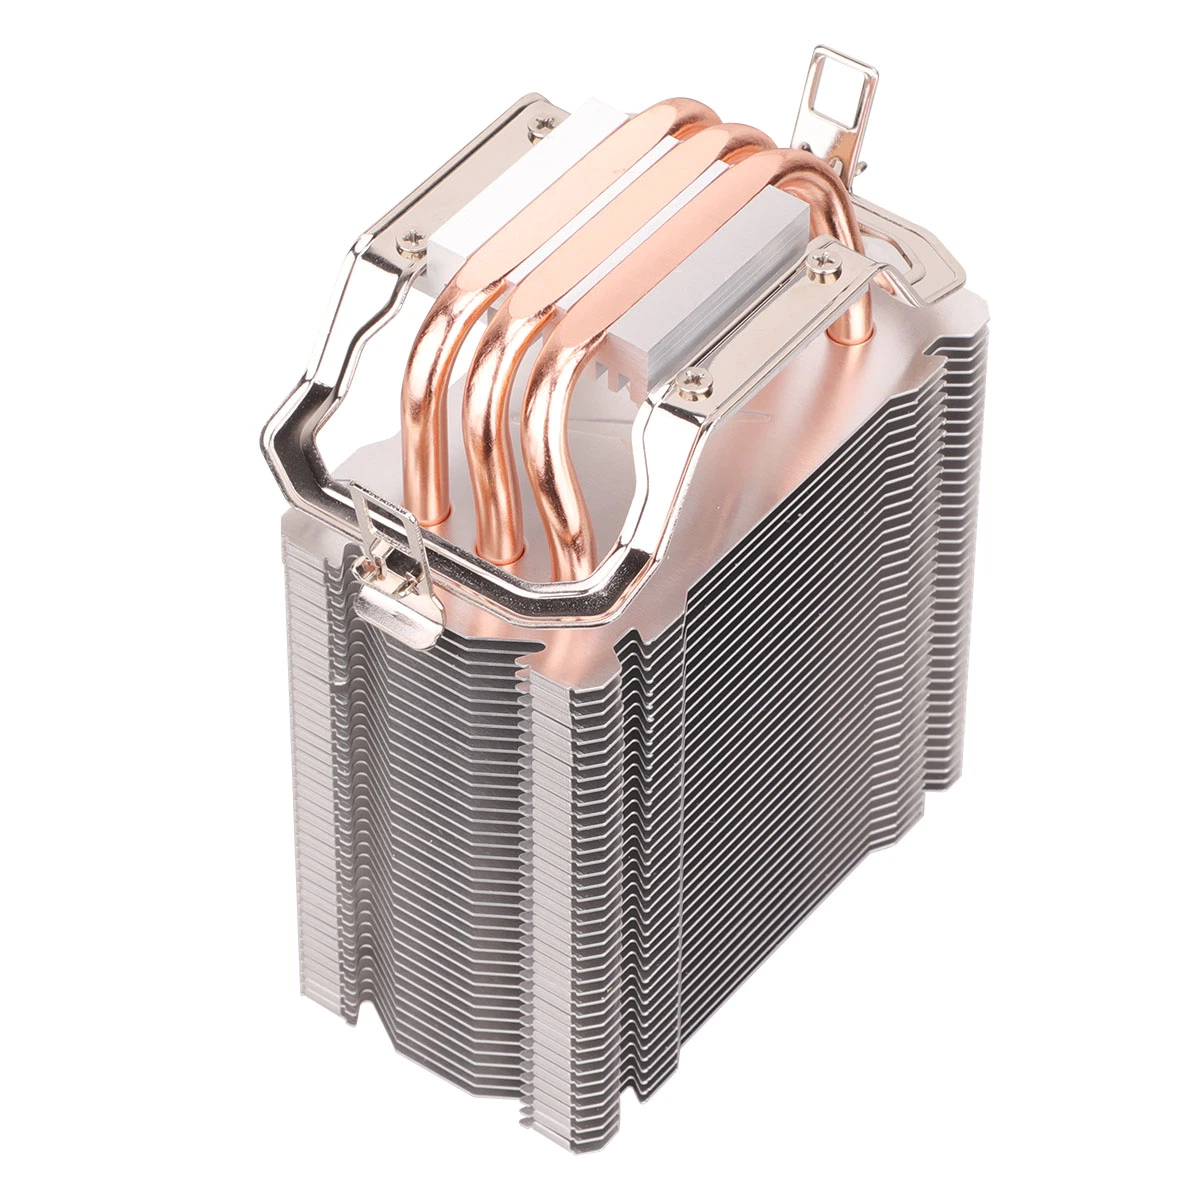 Cooling System Tower CPU Air Cooler Intel Series 5 Heat Pipe CPU Cooler